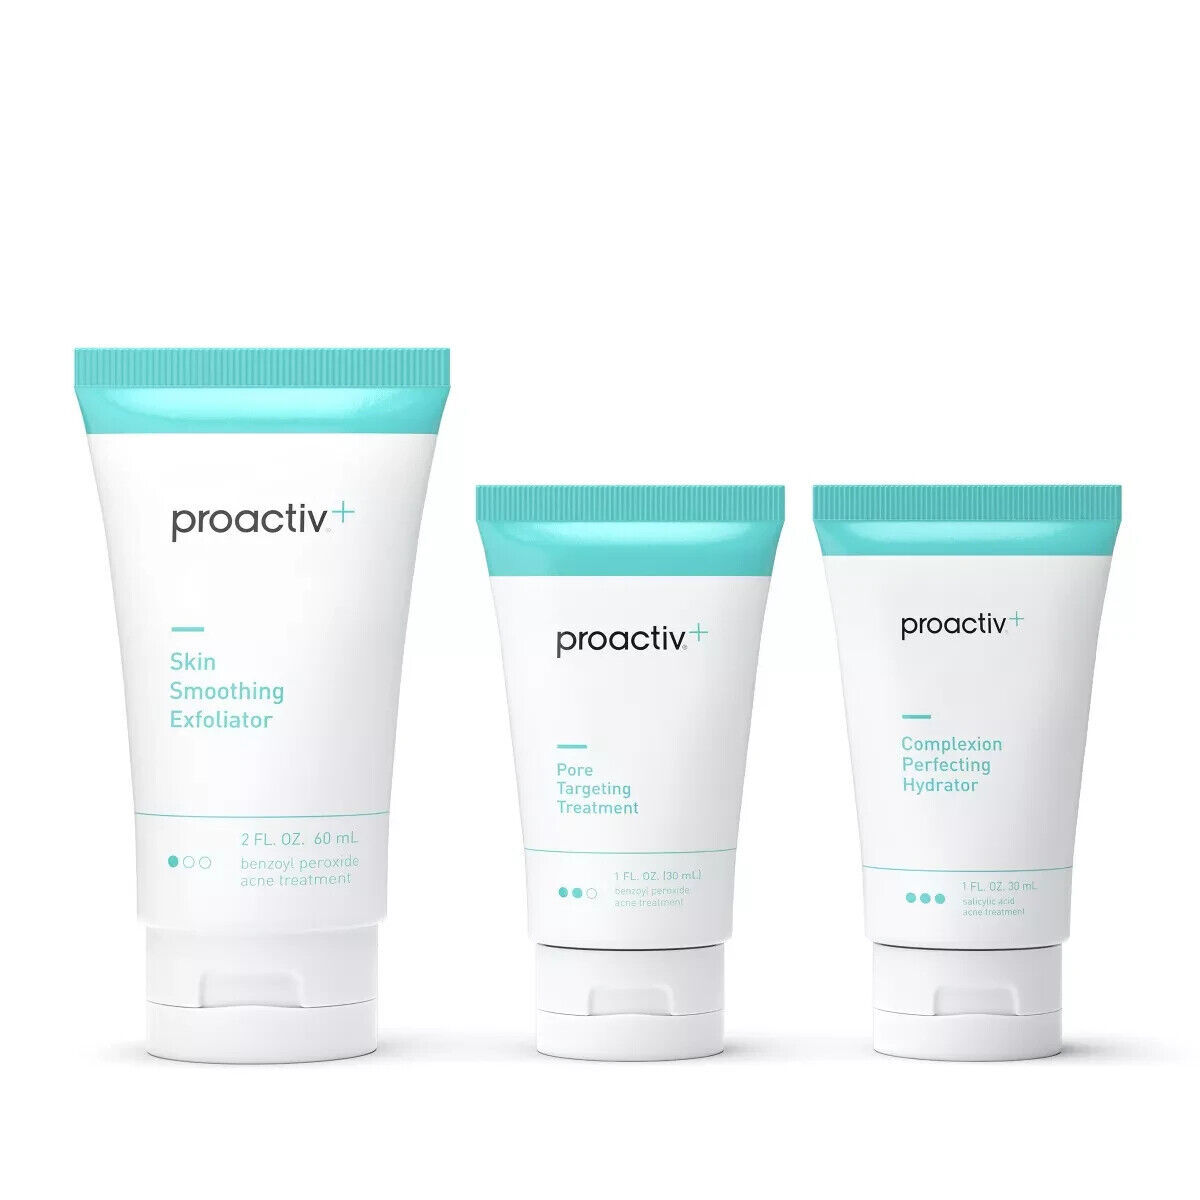 Proactiv+ 30 Day Acne Treatment Kit - 3pc Exp 10/2023, 04/2024, 08/2024 Pack 3 - $45.53